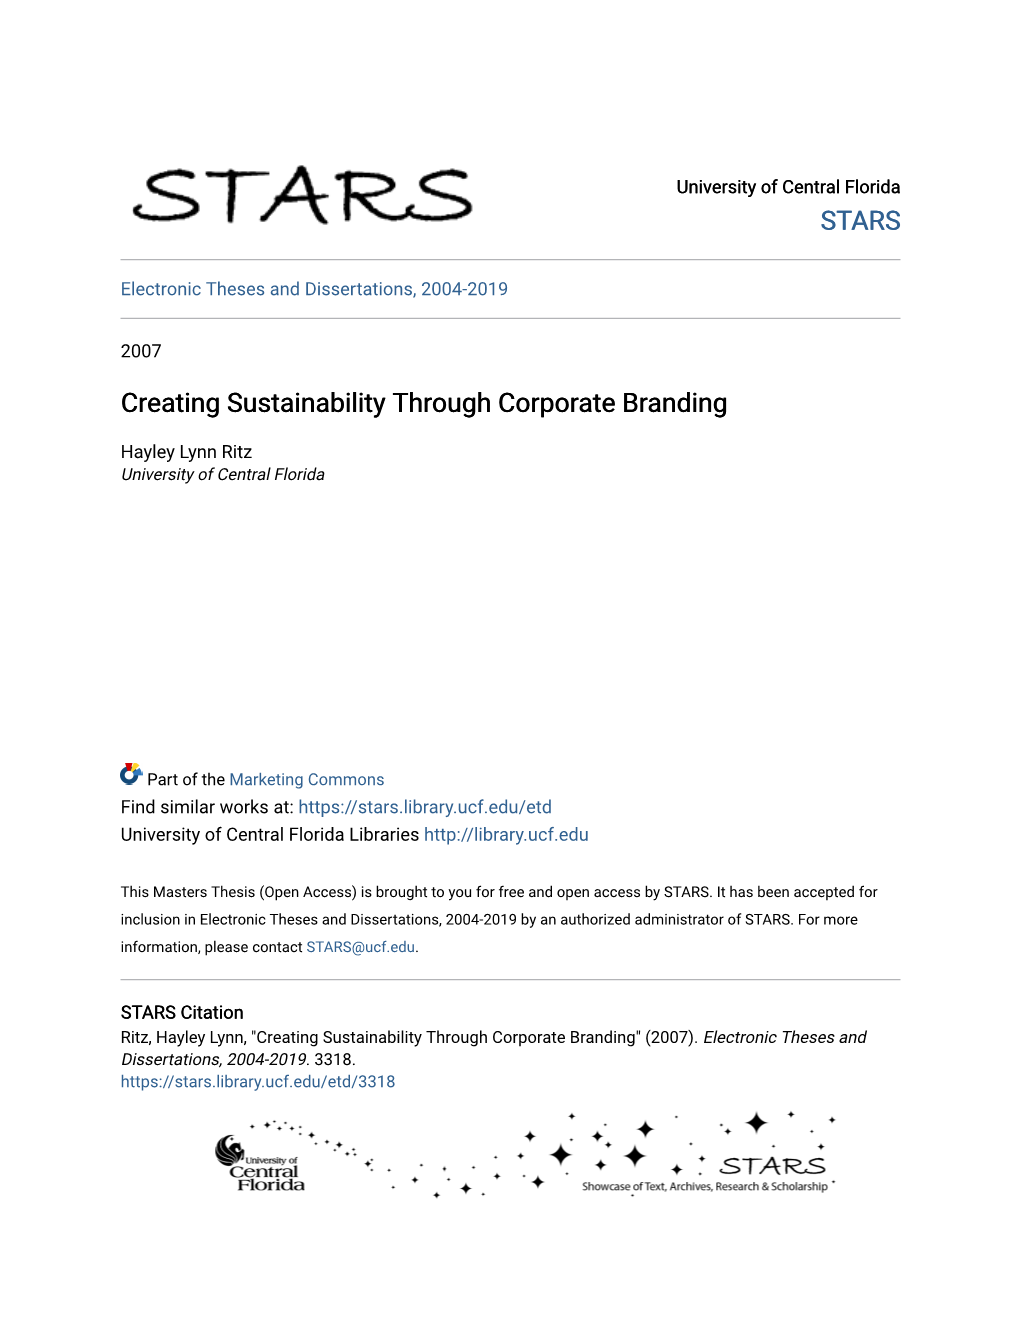 Creating Sustainability Through Corporate Branding